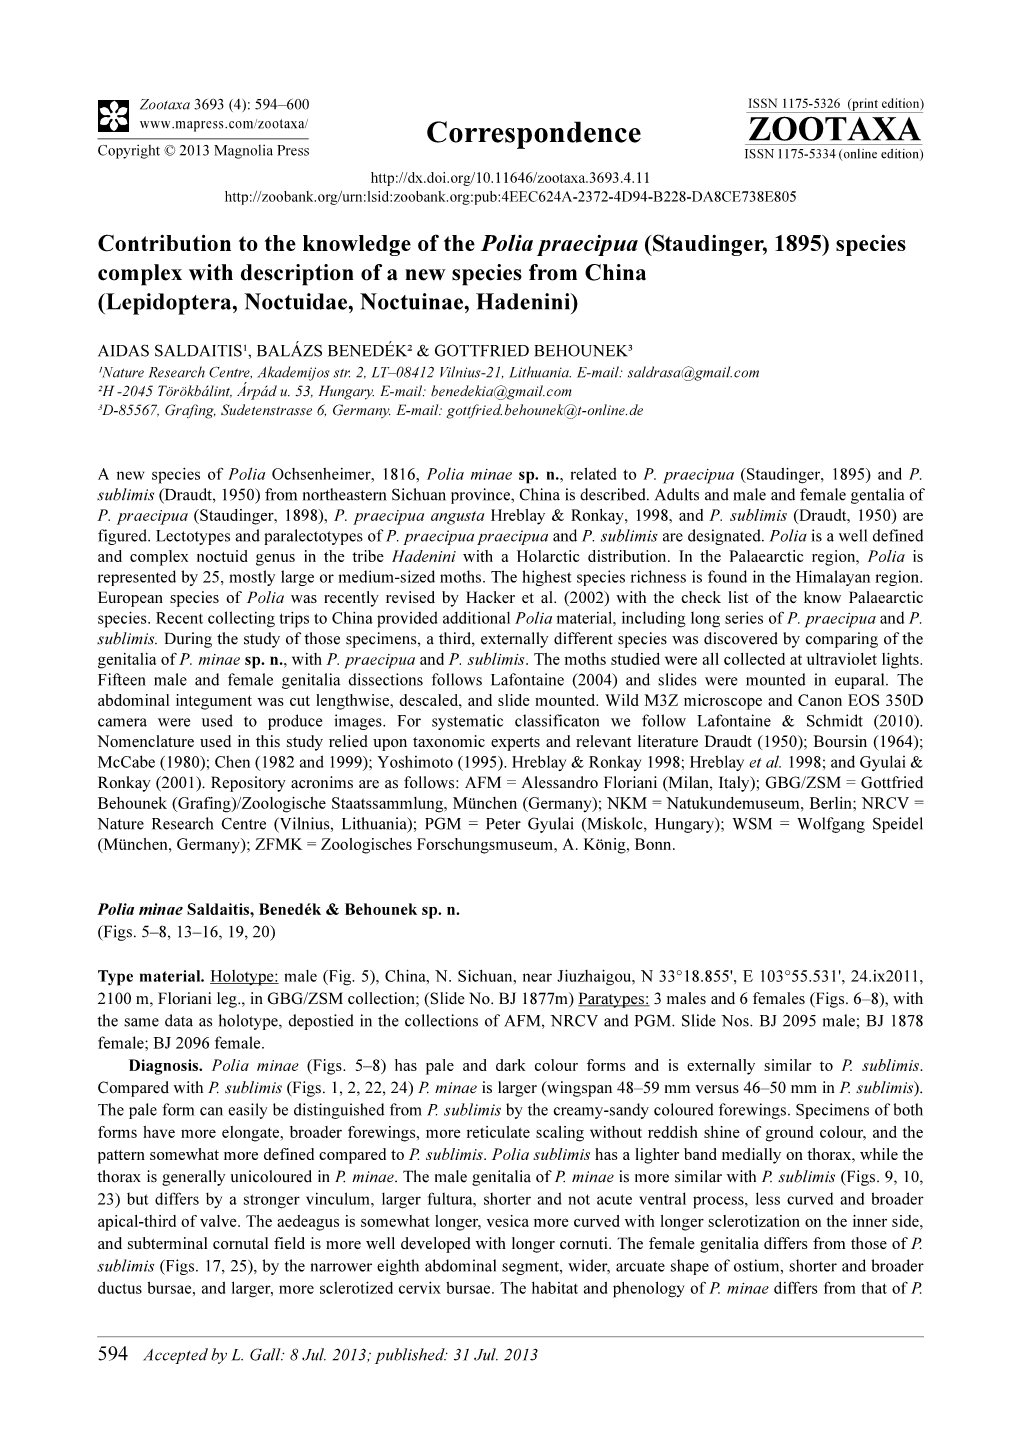 Contribution to the Knowledge of the Polia Praecipua